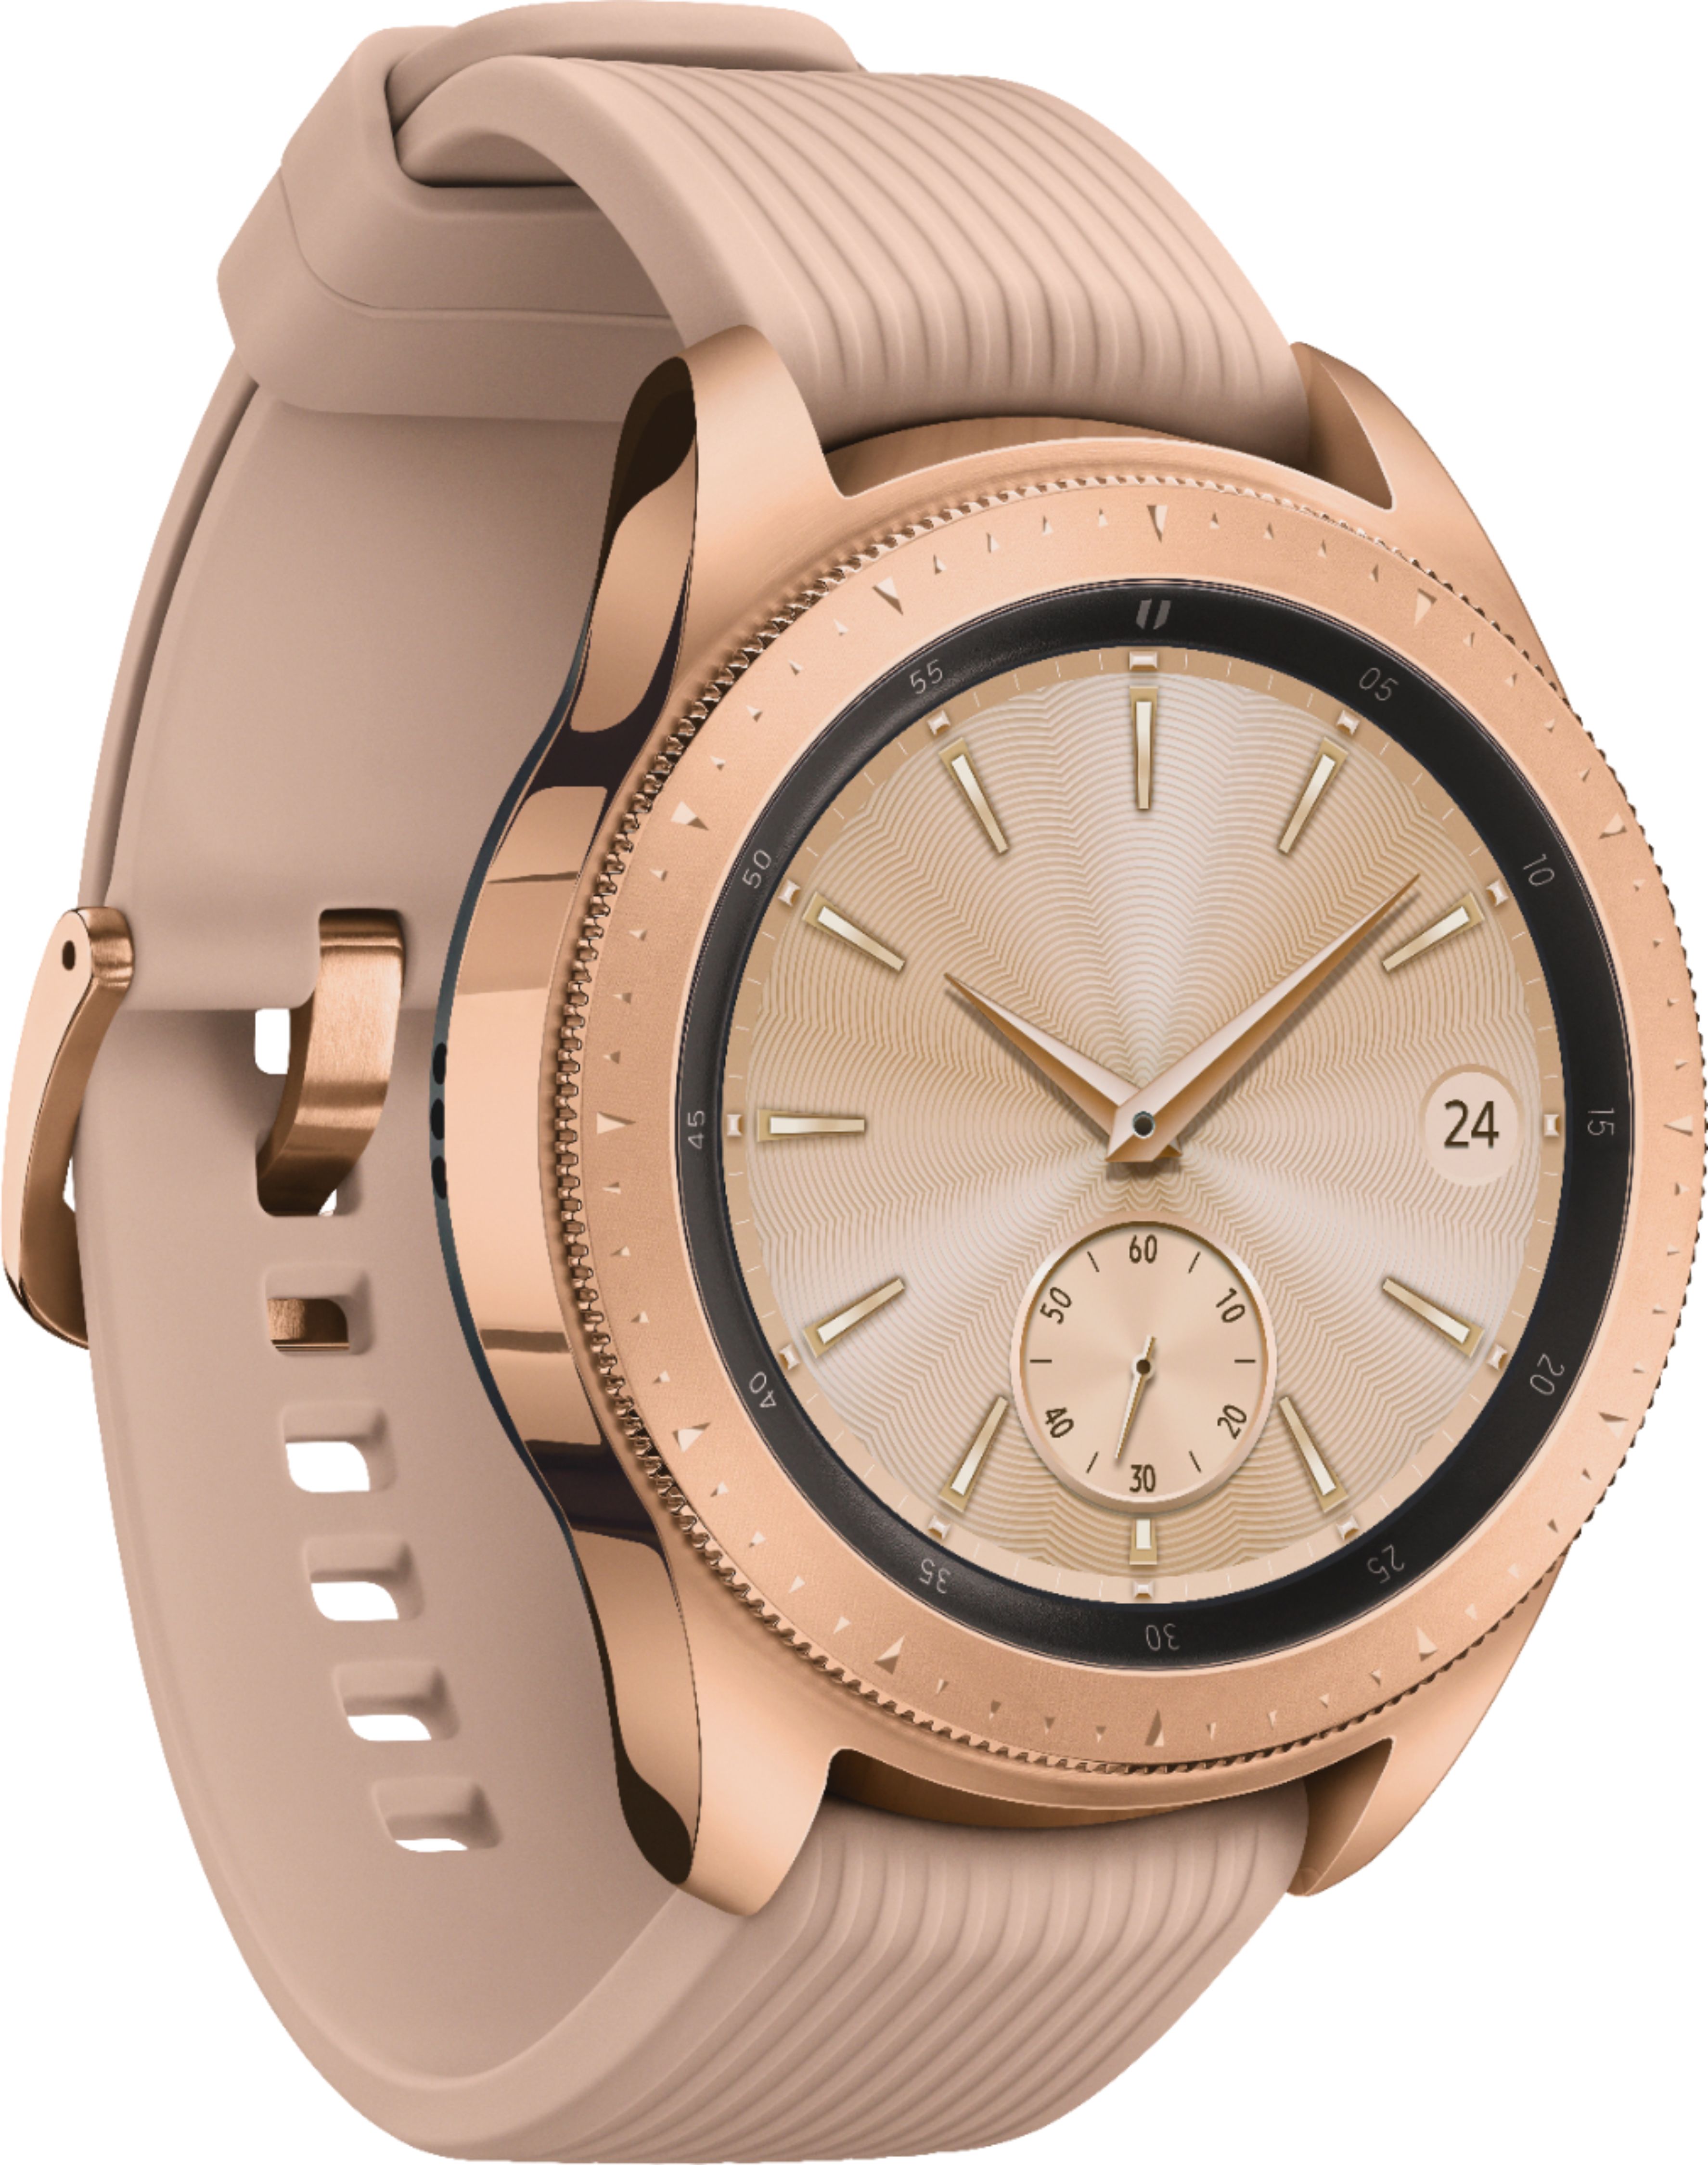 Samsung Geek Squad Certified Refurbished Galaxy Watch Smartwatch 42mm Stainless Steel Rose Gold Gsrf Sm R810nzdaxar Best Buy